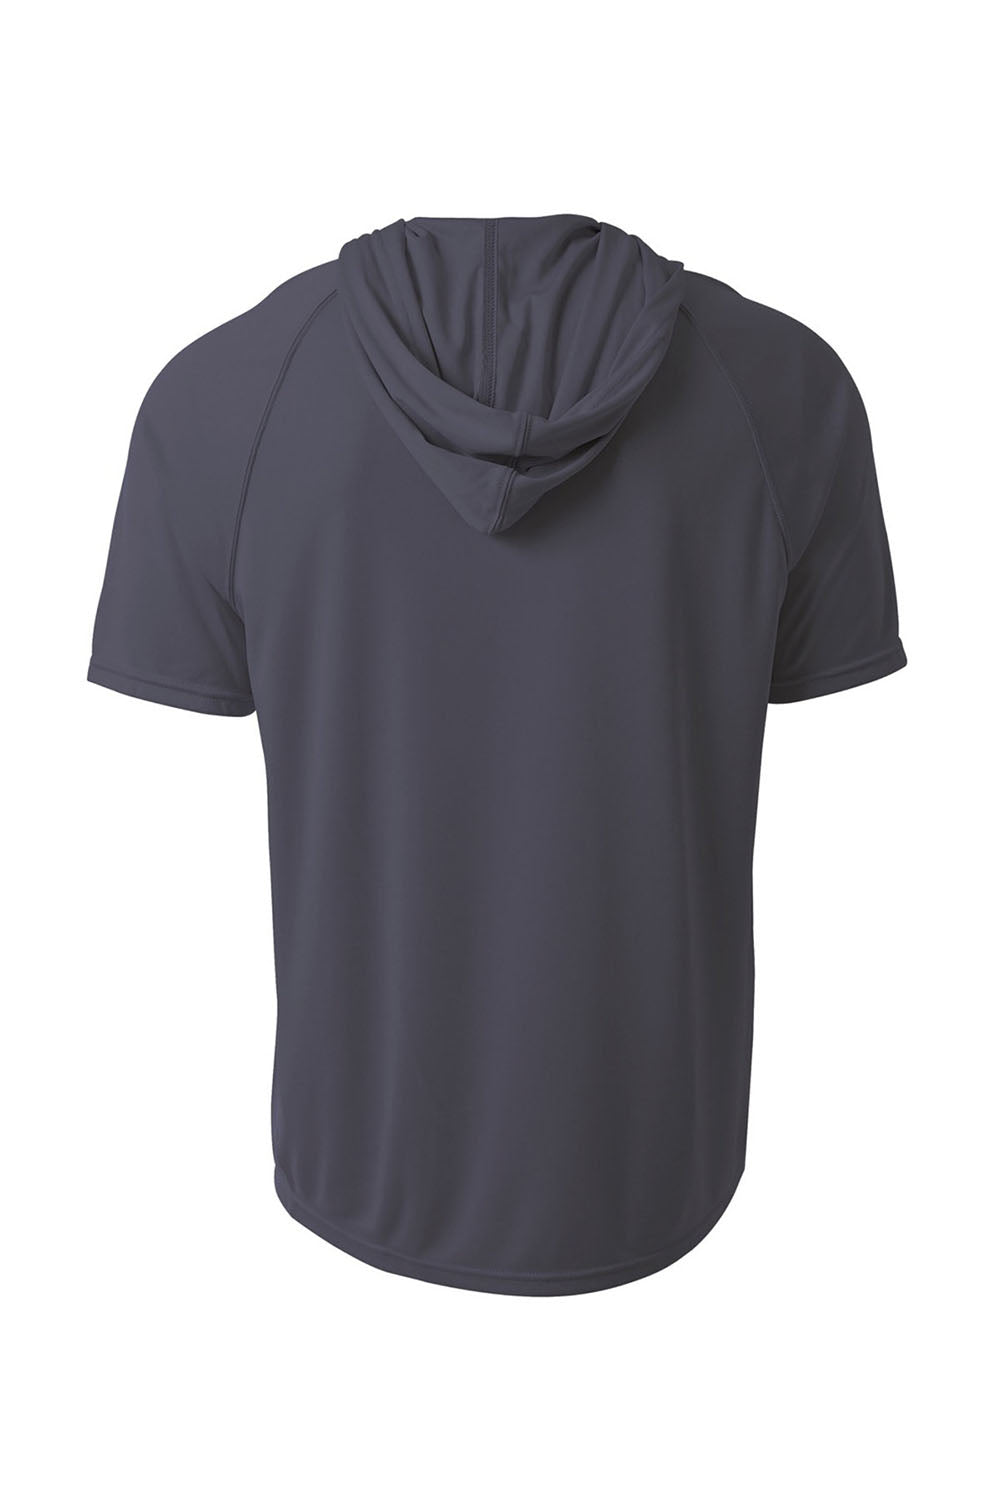 A4 N3408 Mens Performance Moisture Wicking Short Sleeve Hooded T-Shirt Hoodie Graphite Grey Flat Back